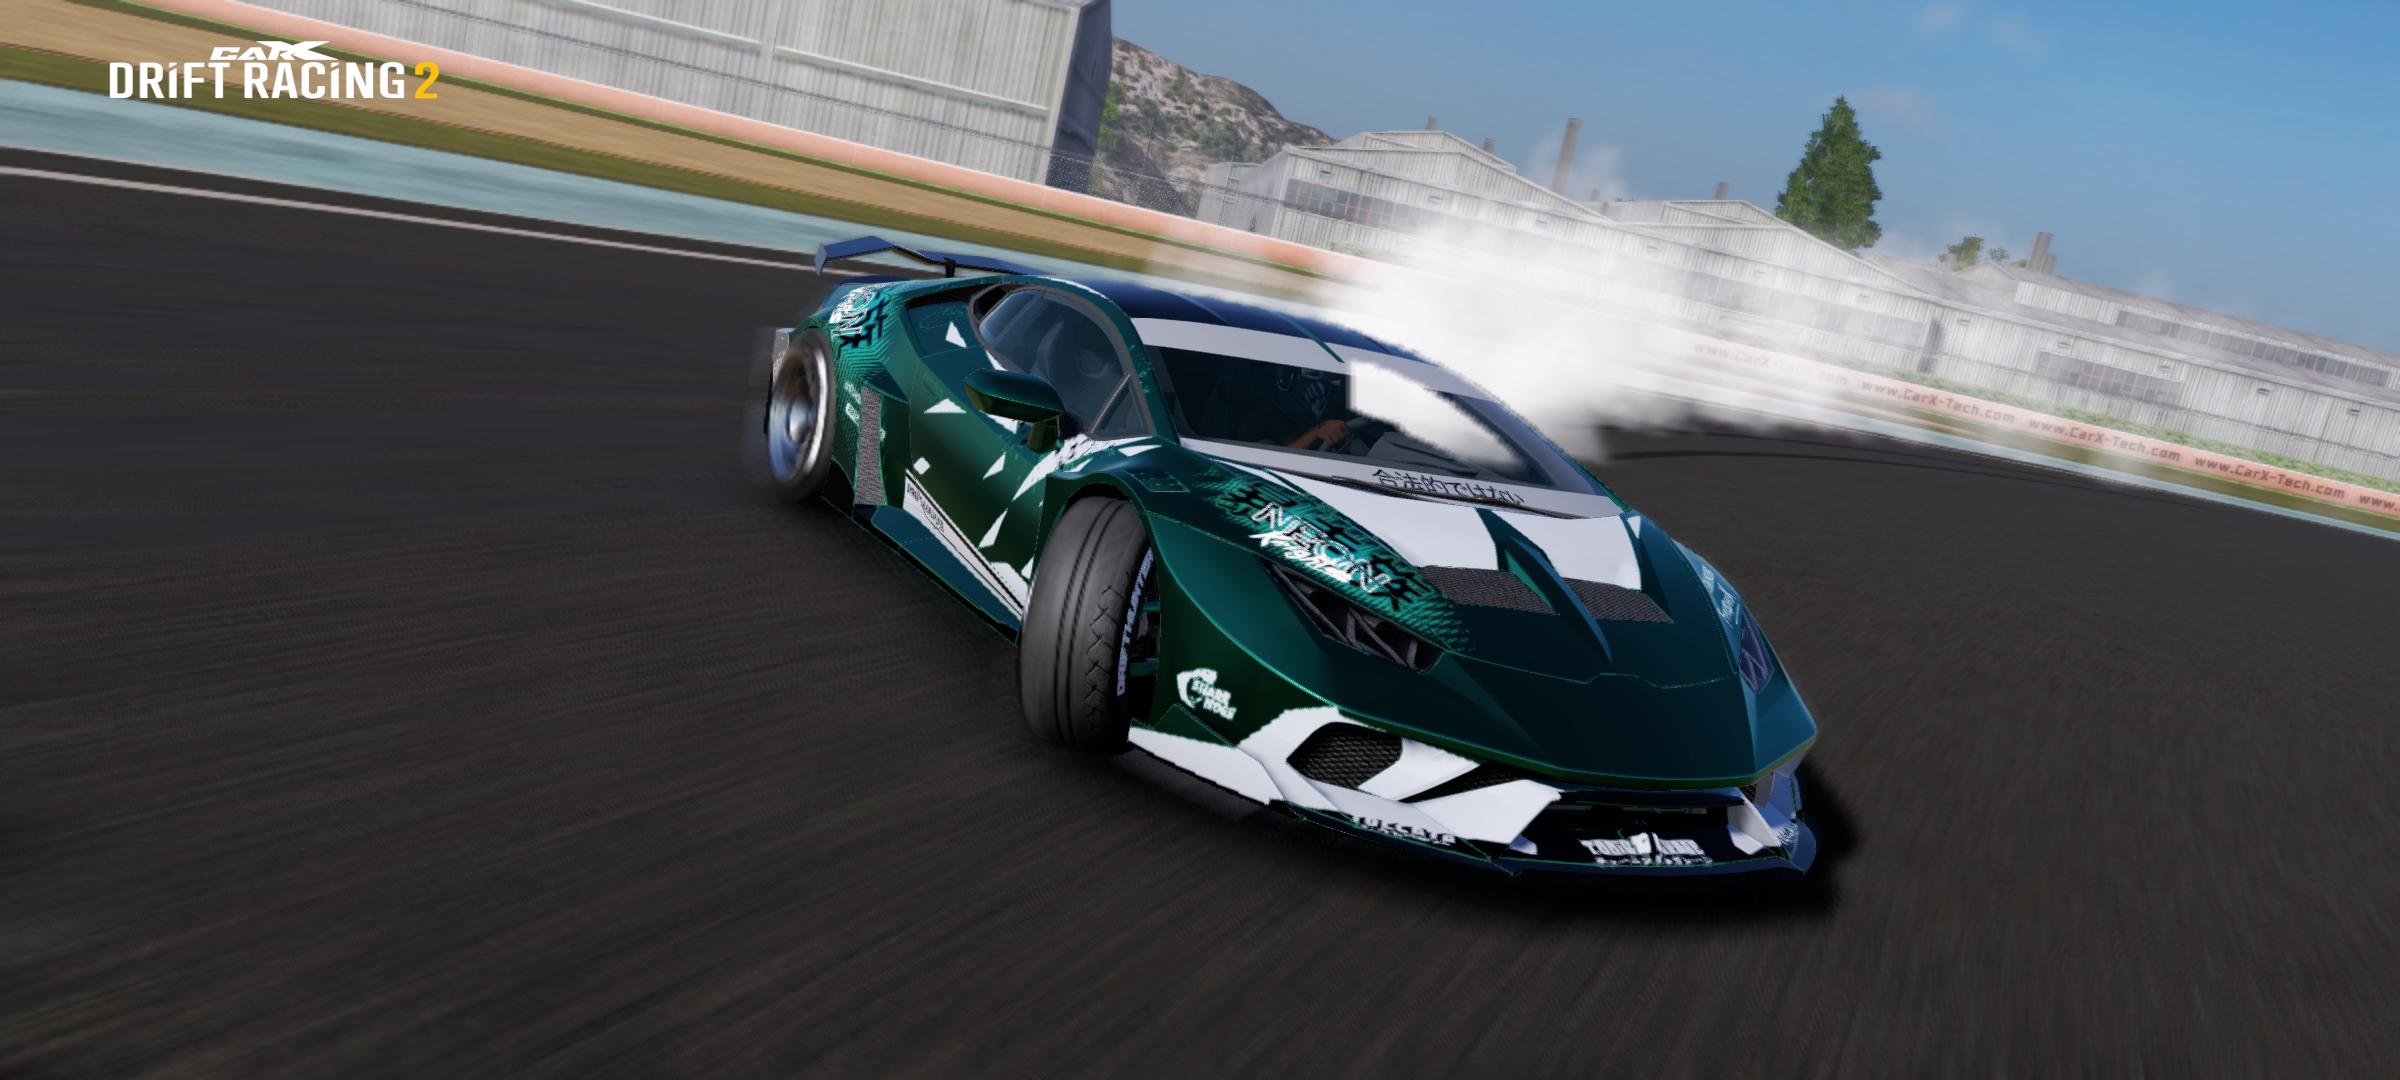 CarX Drift Racing 2 –